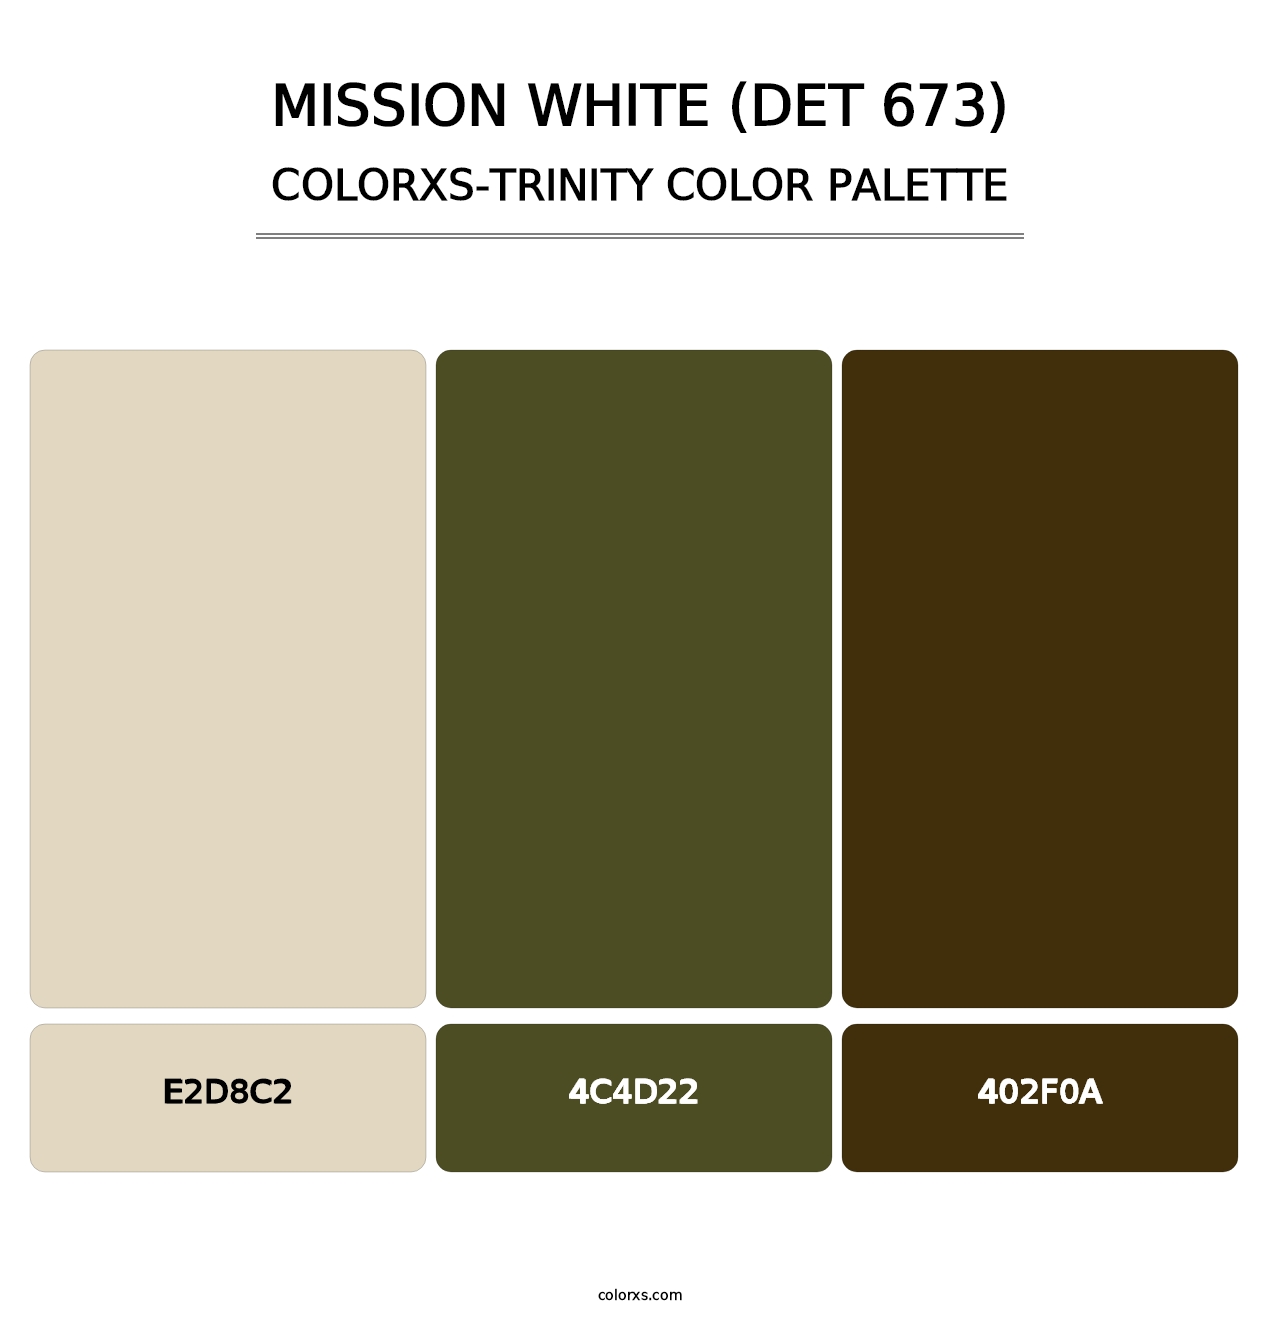 Mission White (DET 673) - Colorxs Trinity Palette